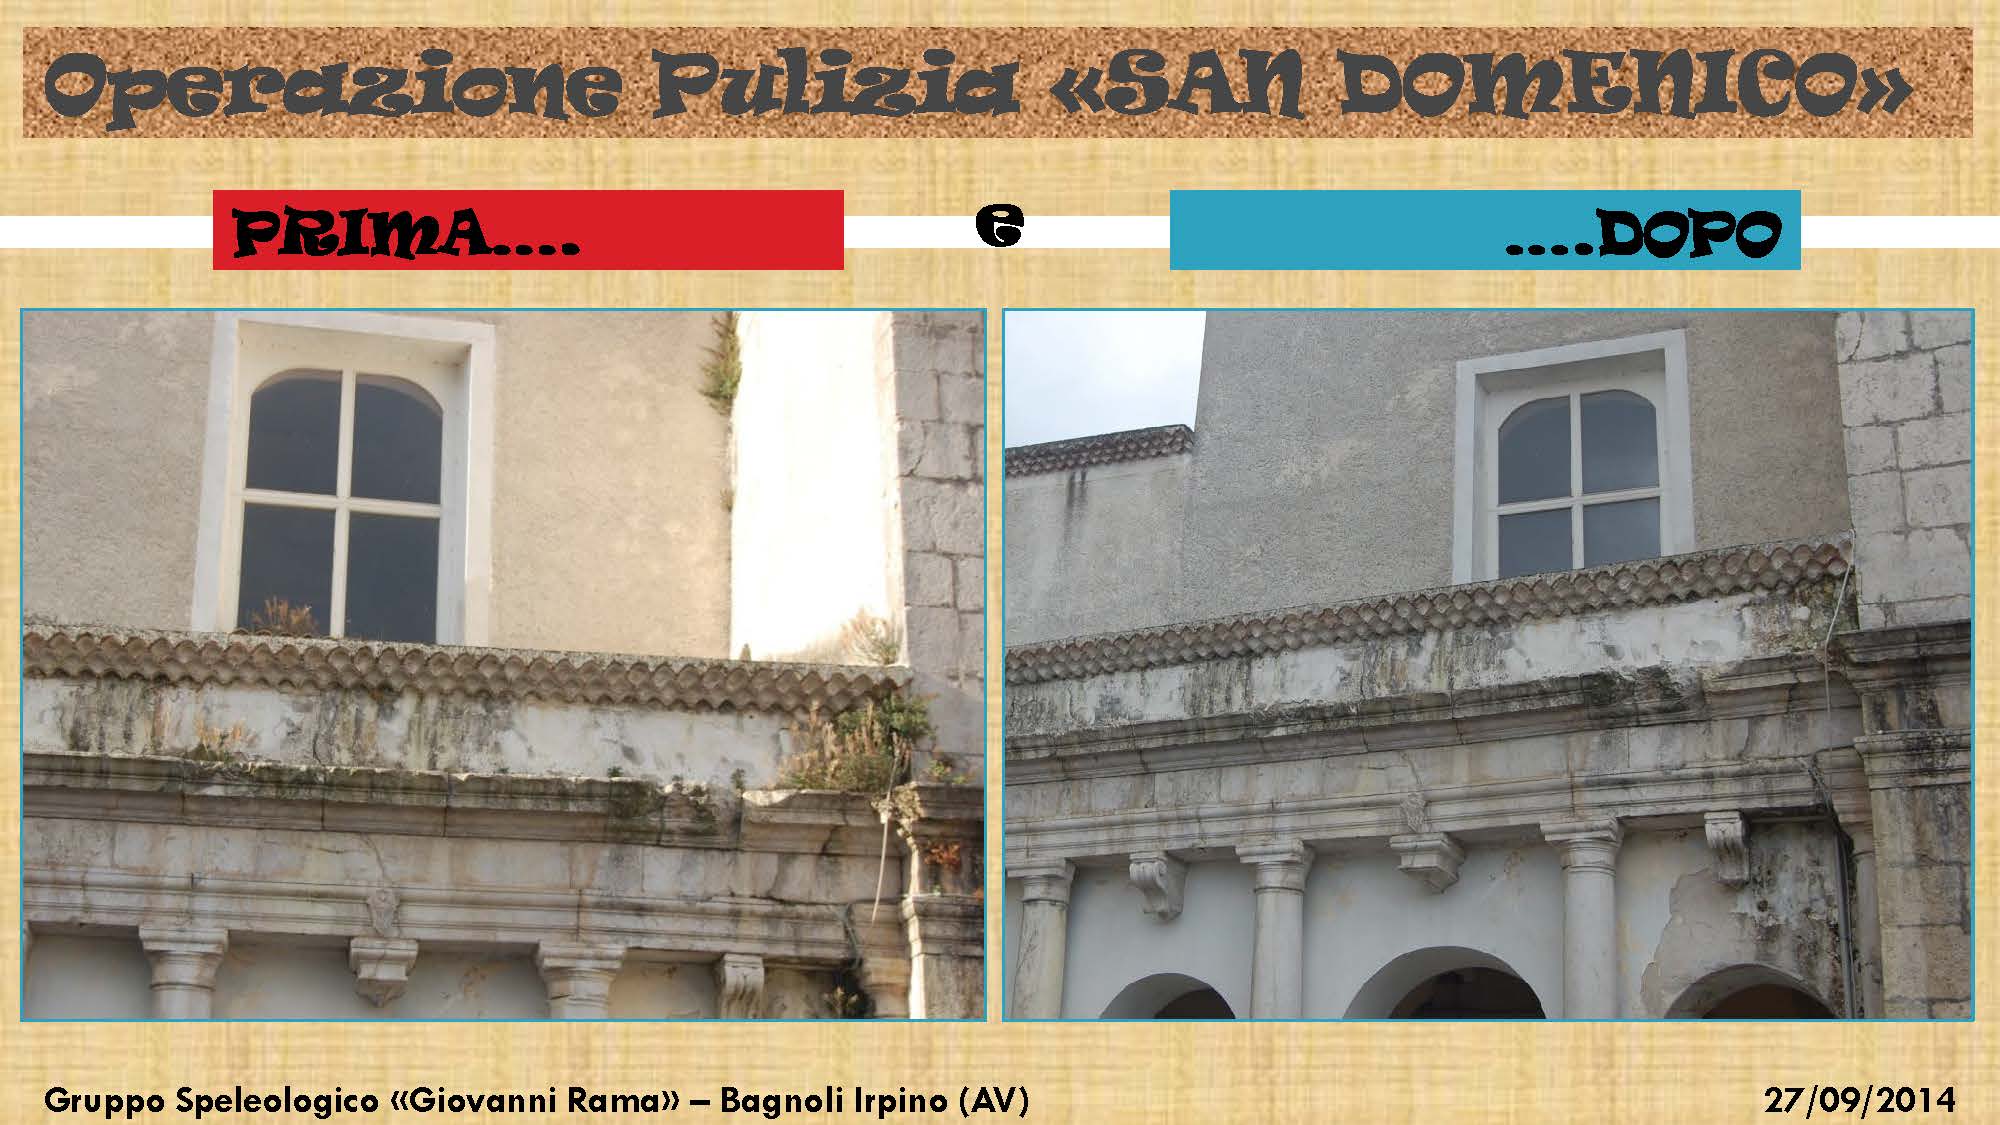 Bagnoli-Pulizia-San-Domenico-2014_Pagina_04